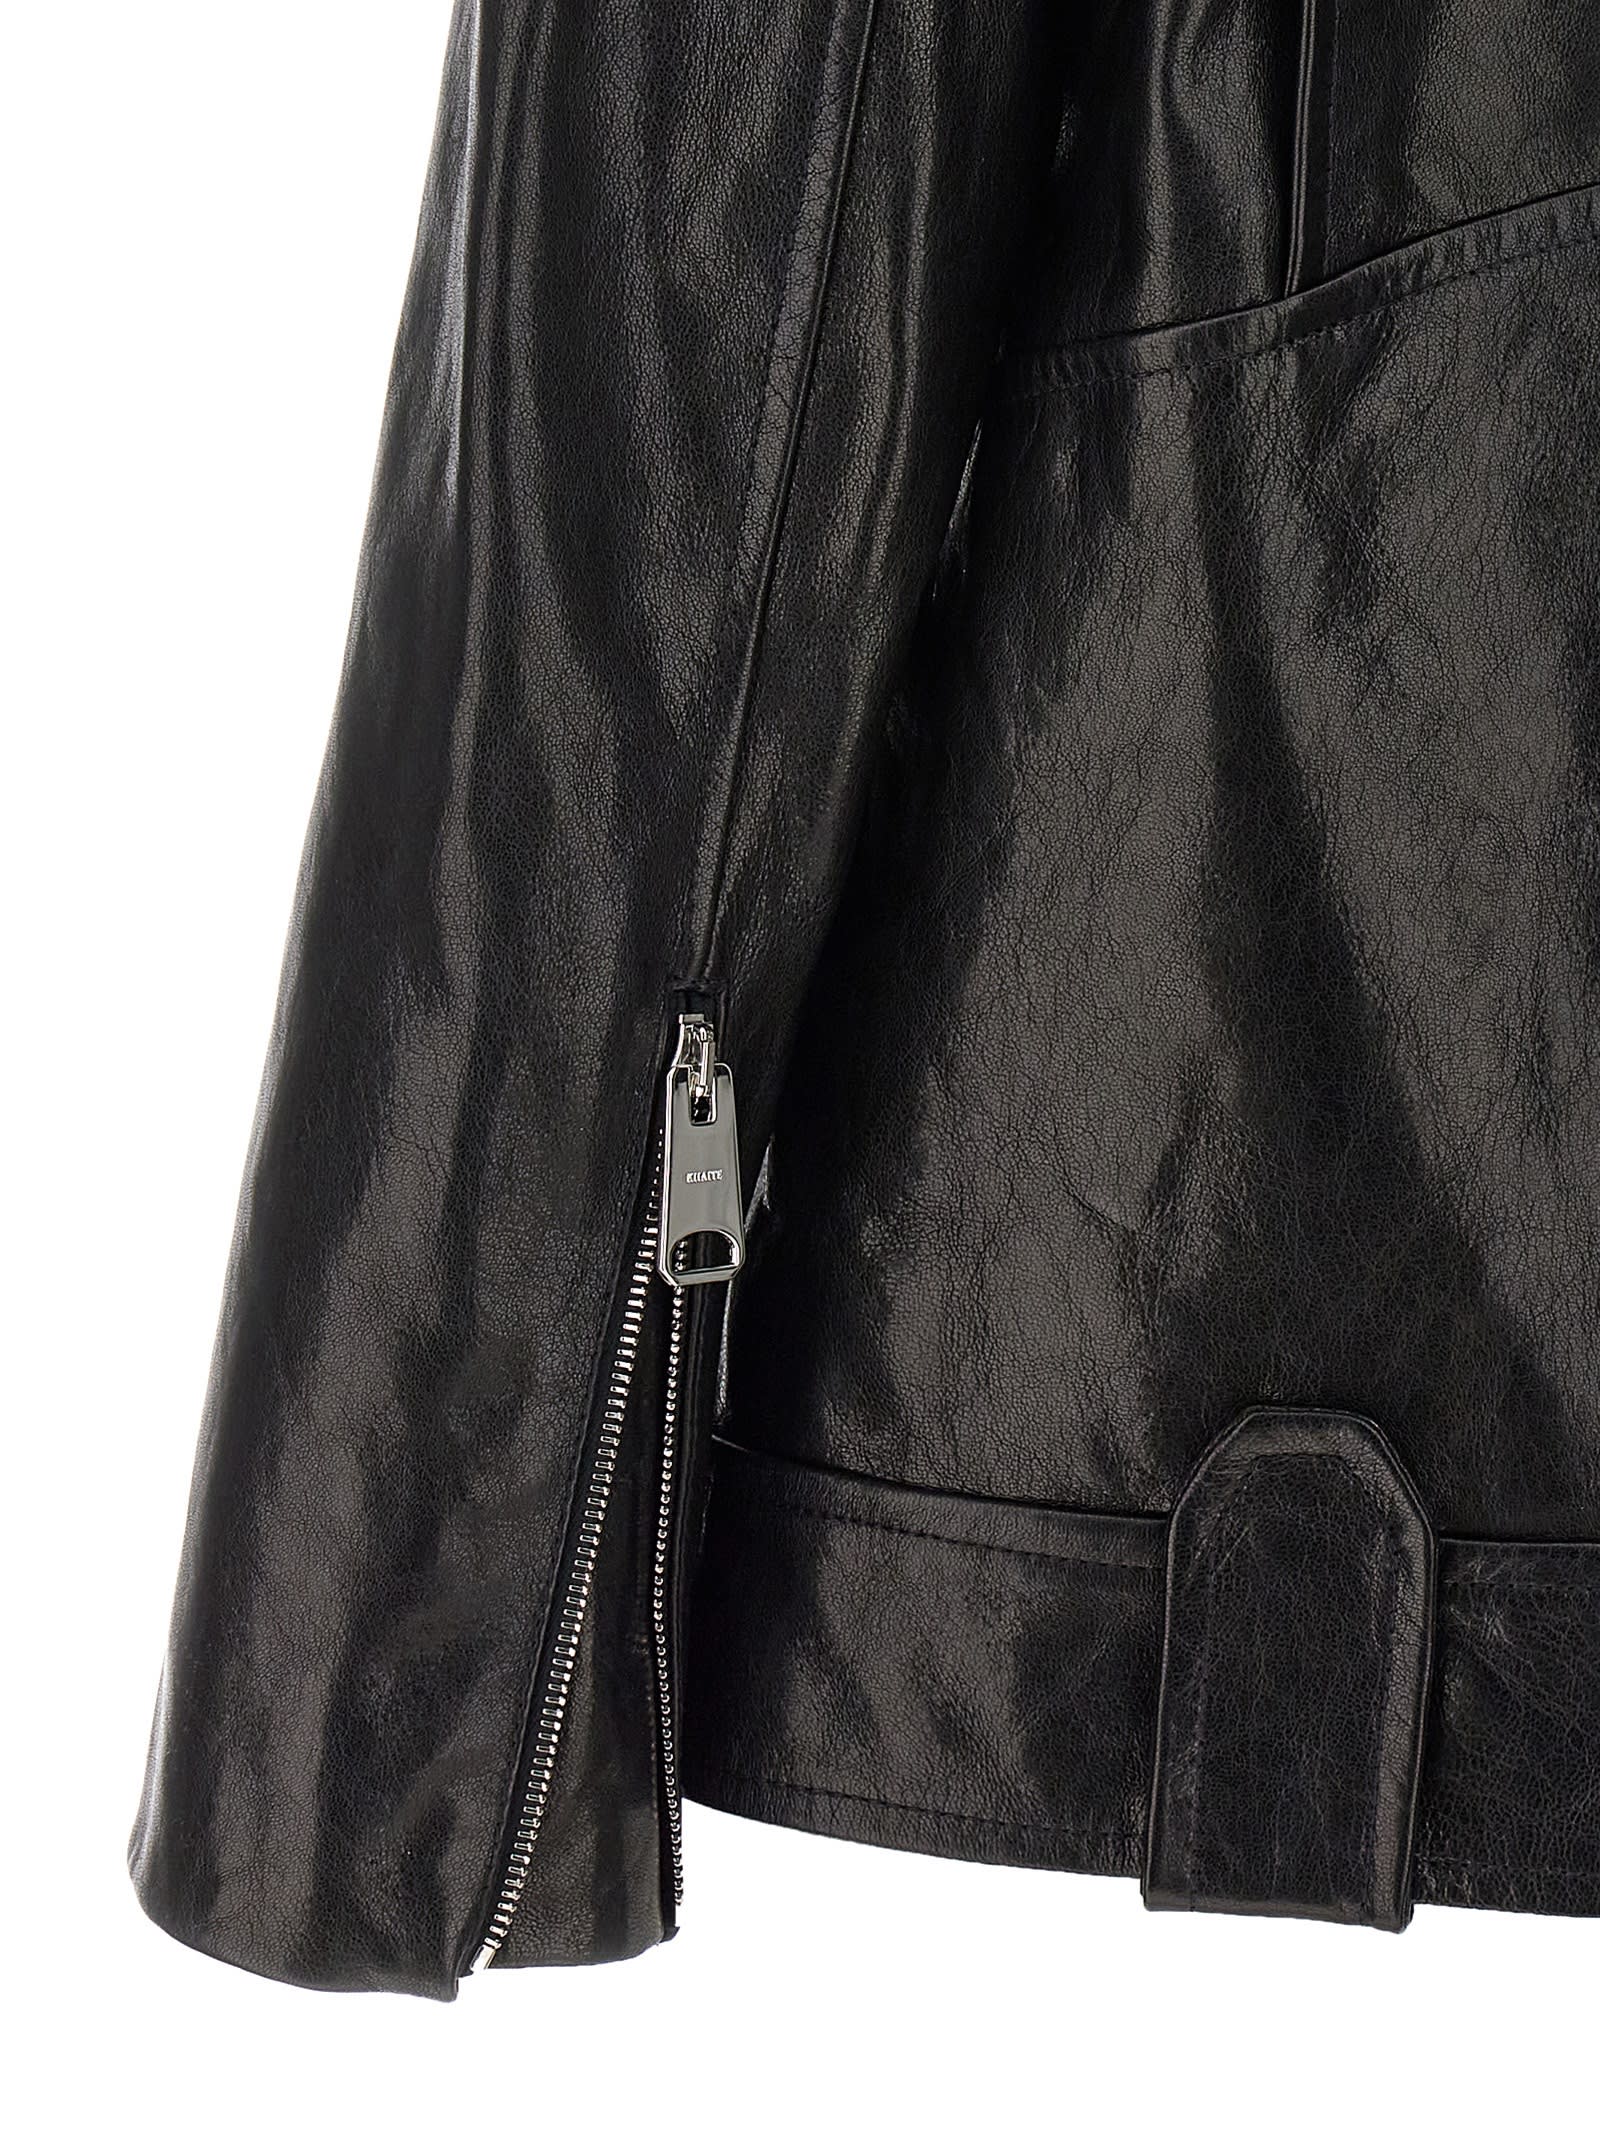 Shop Khaite Hanson Leather Biker Jacket In Black